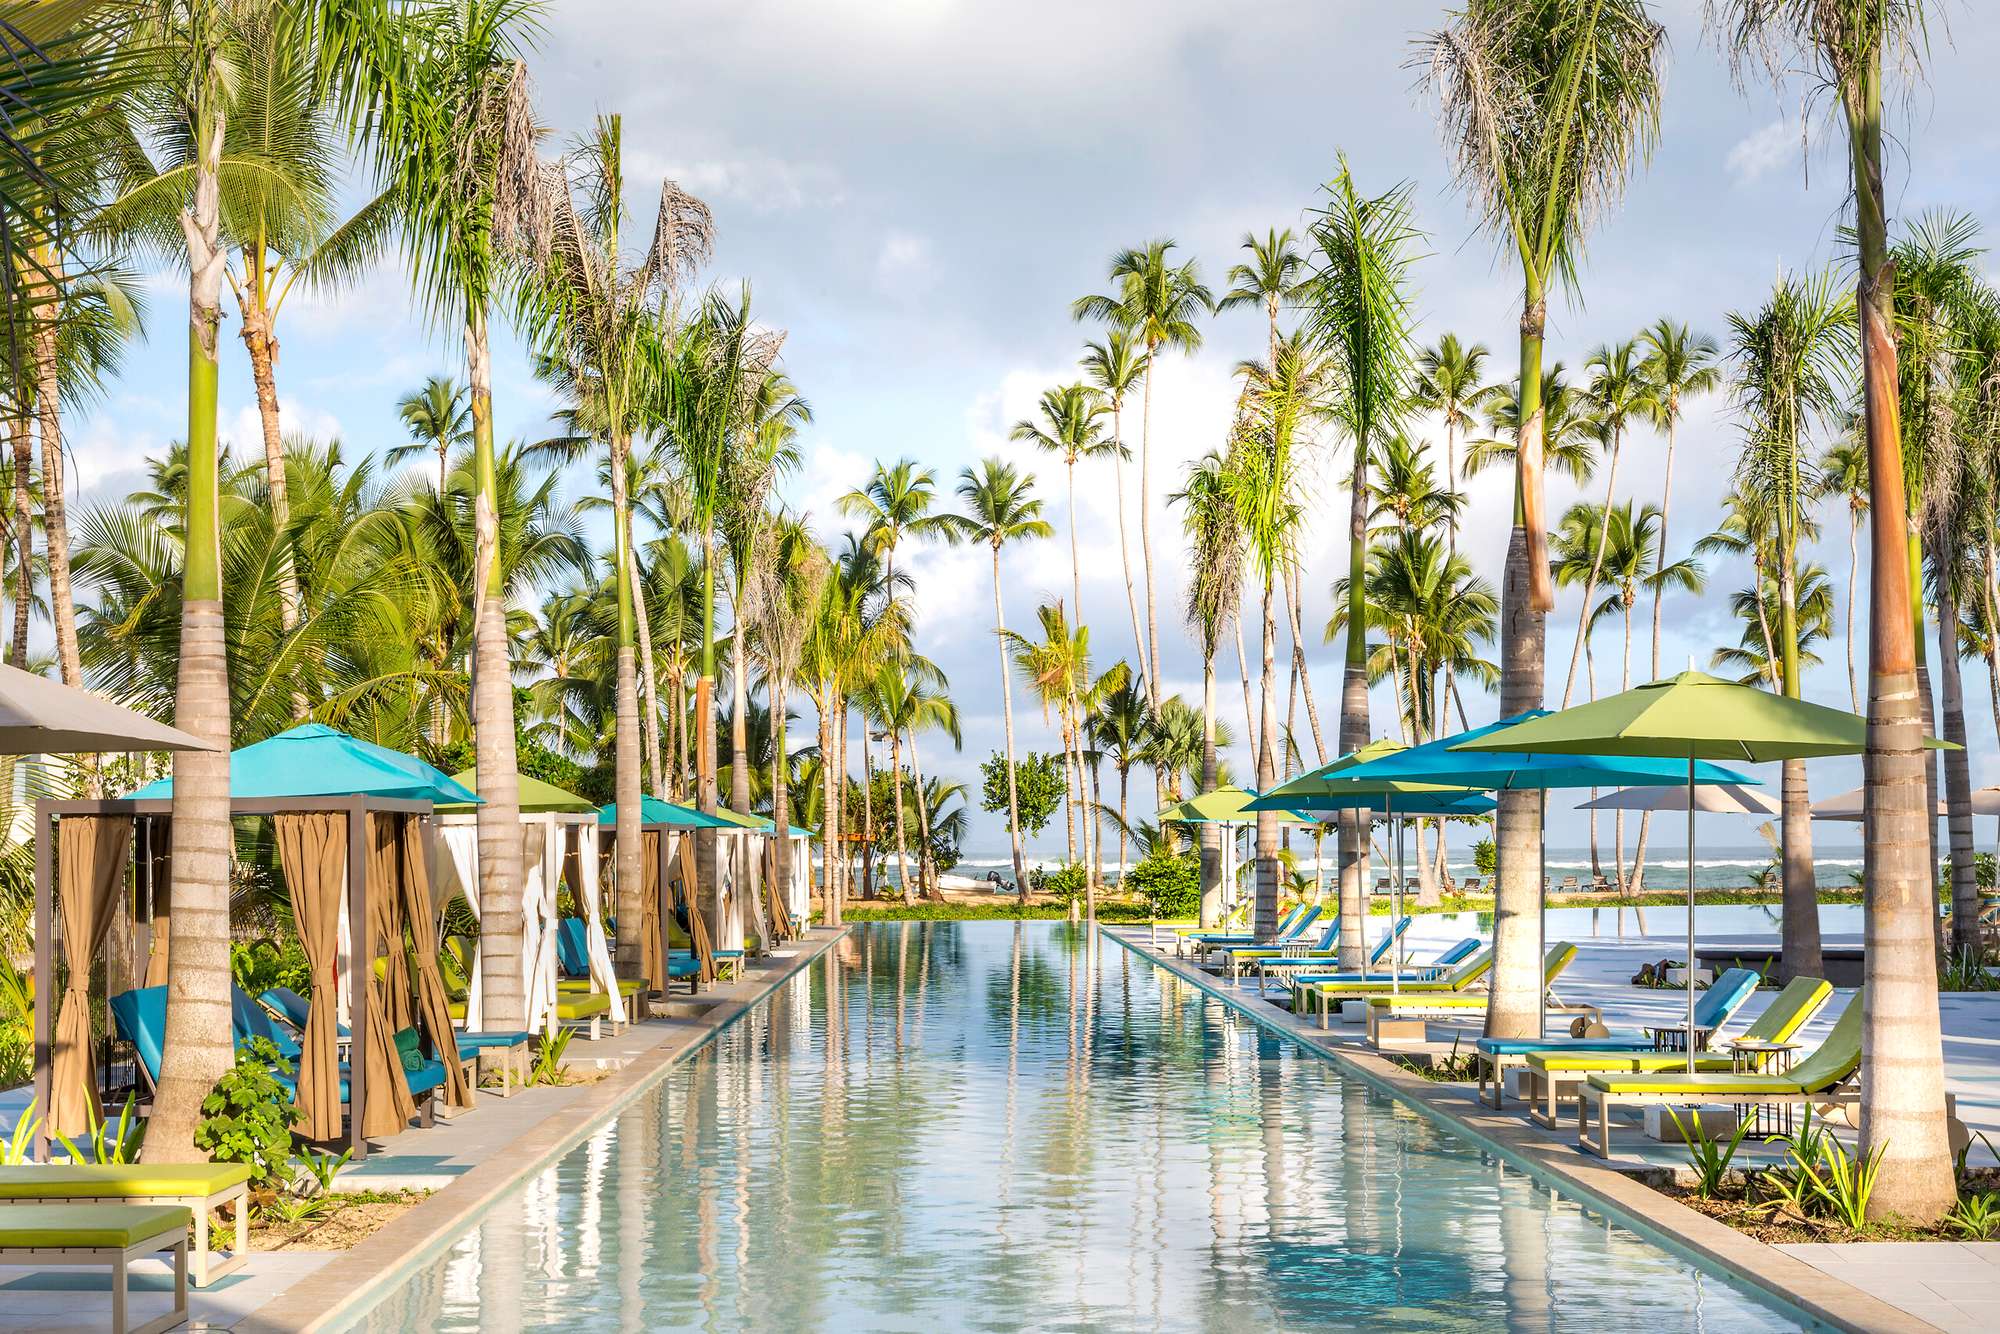 Property image of Club Med Miches Playa Esmeralda